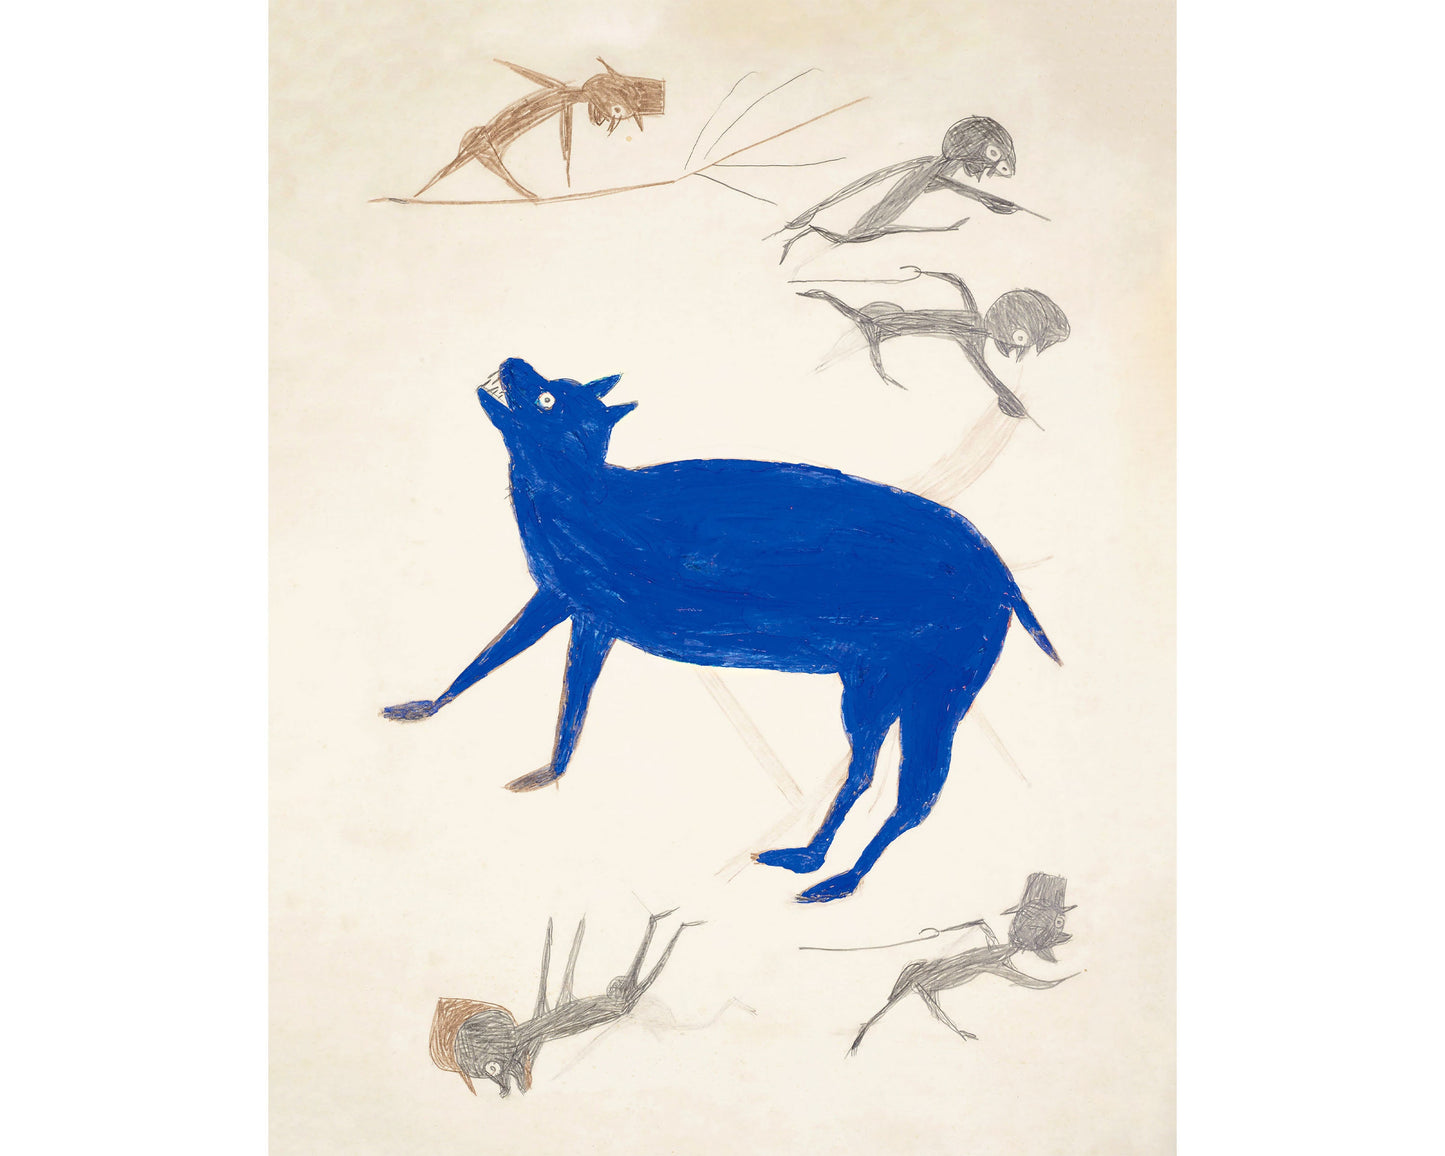 Bill Traylor Americana art | Blue animal with figures | Animal folk art | African American self-taught artist | Modern vintage wall décor